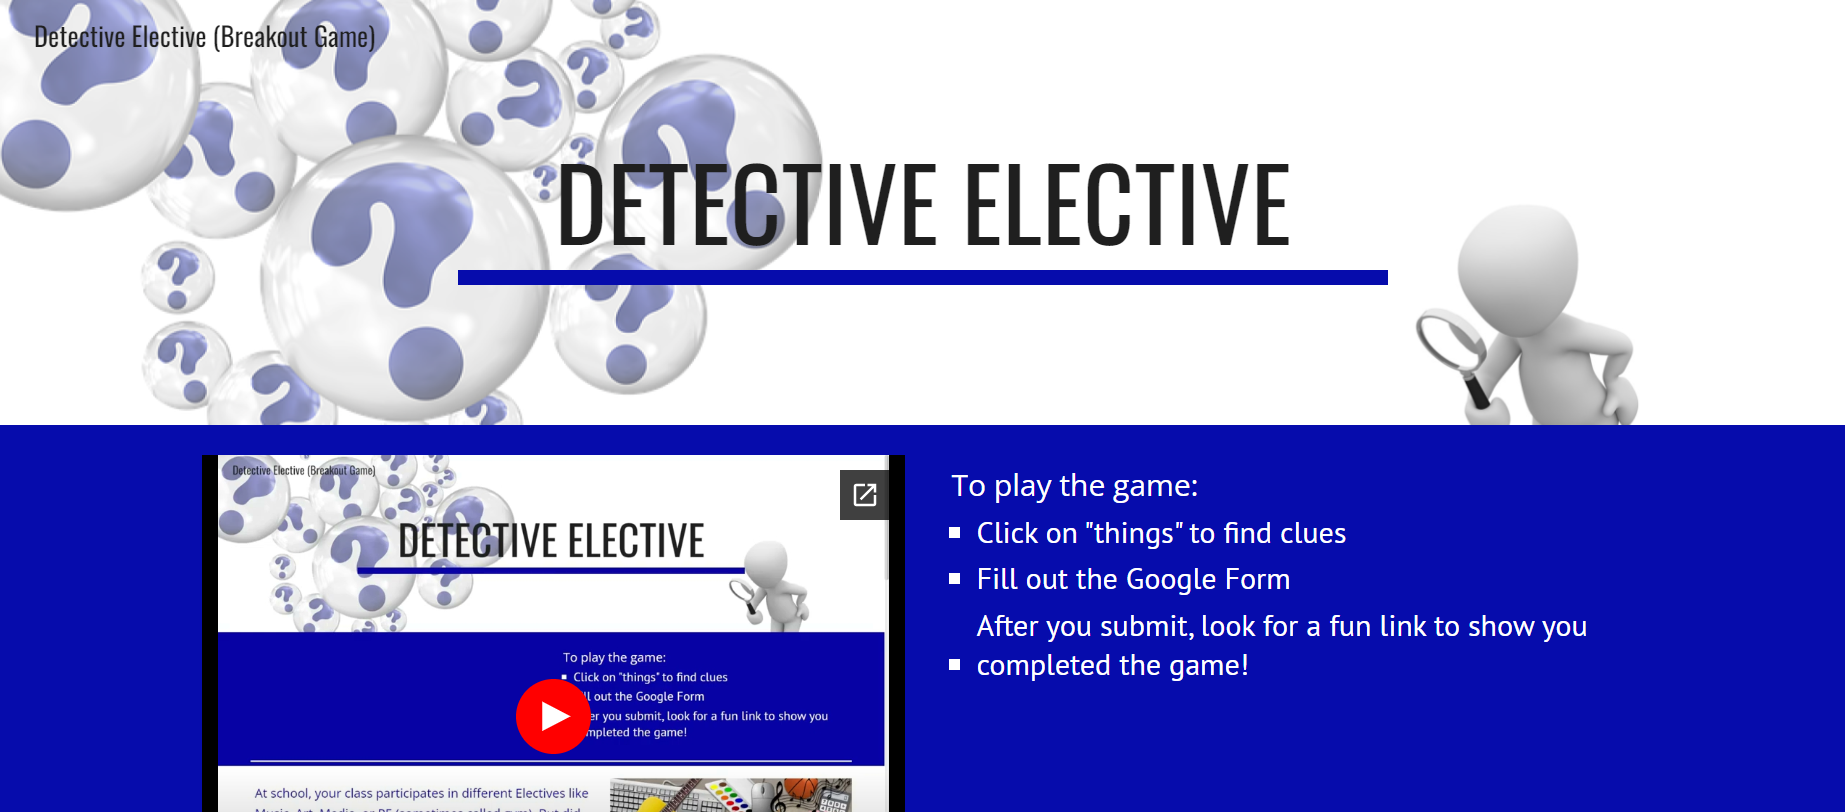 Detective Elective Digital Breakout game banner